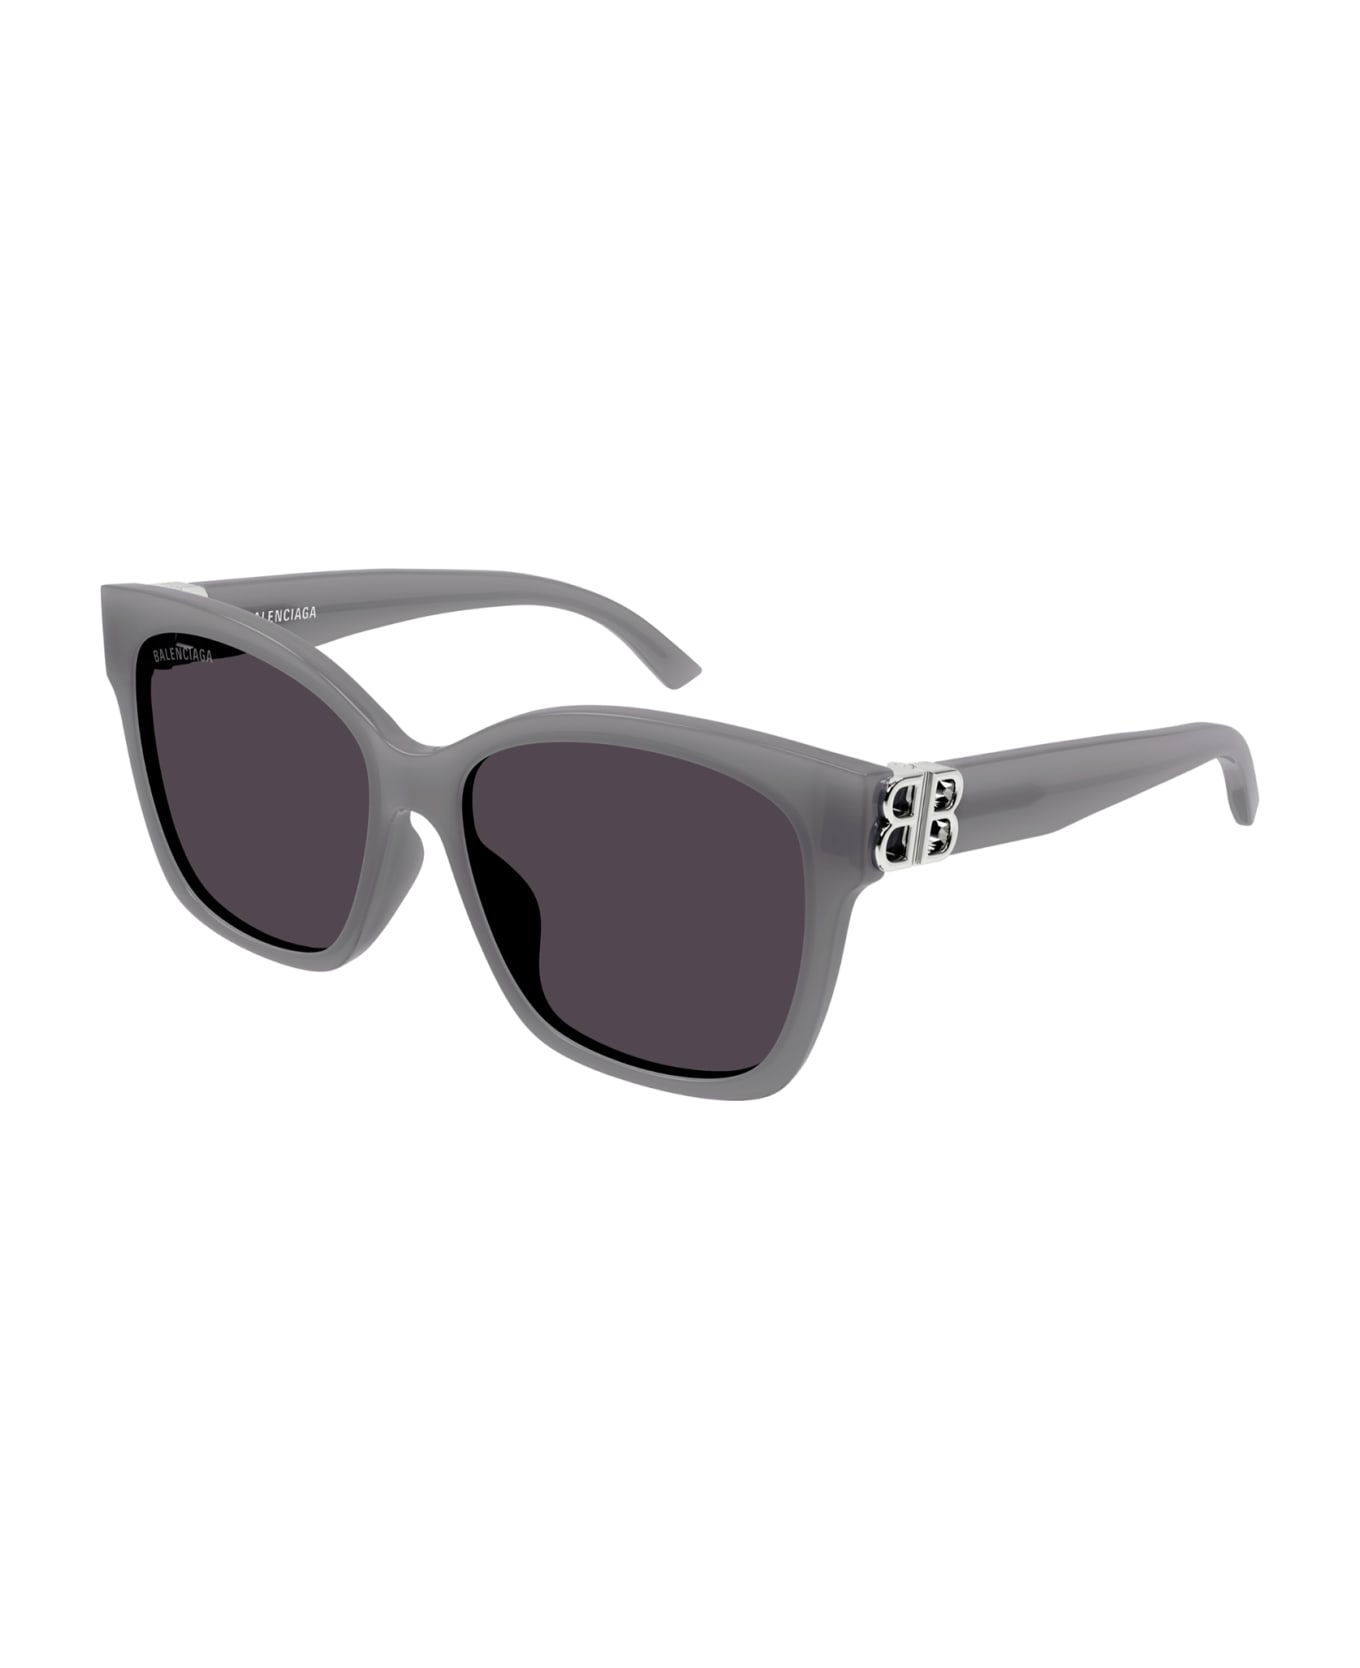 Balenciaga Eyewear BB0102SA Sunglasses - Grey Silver Grey